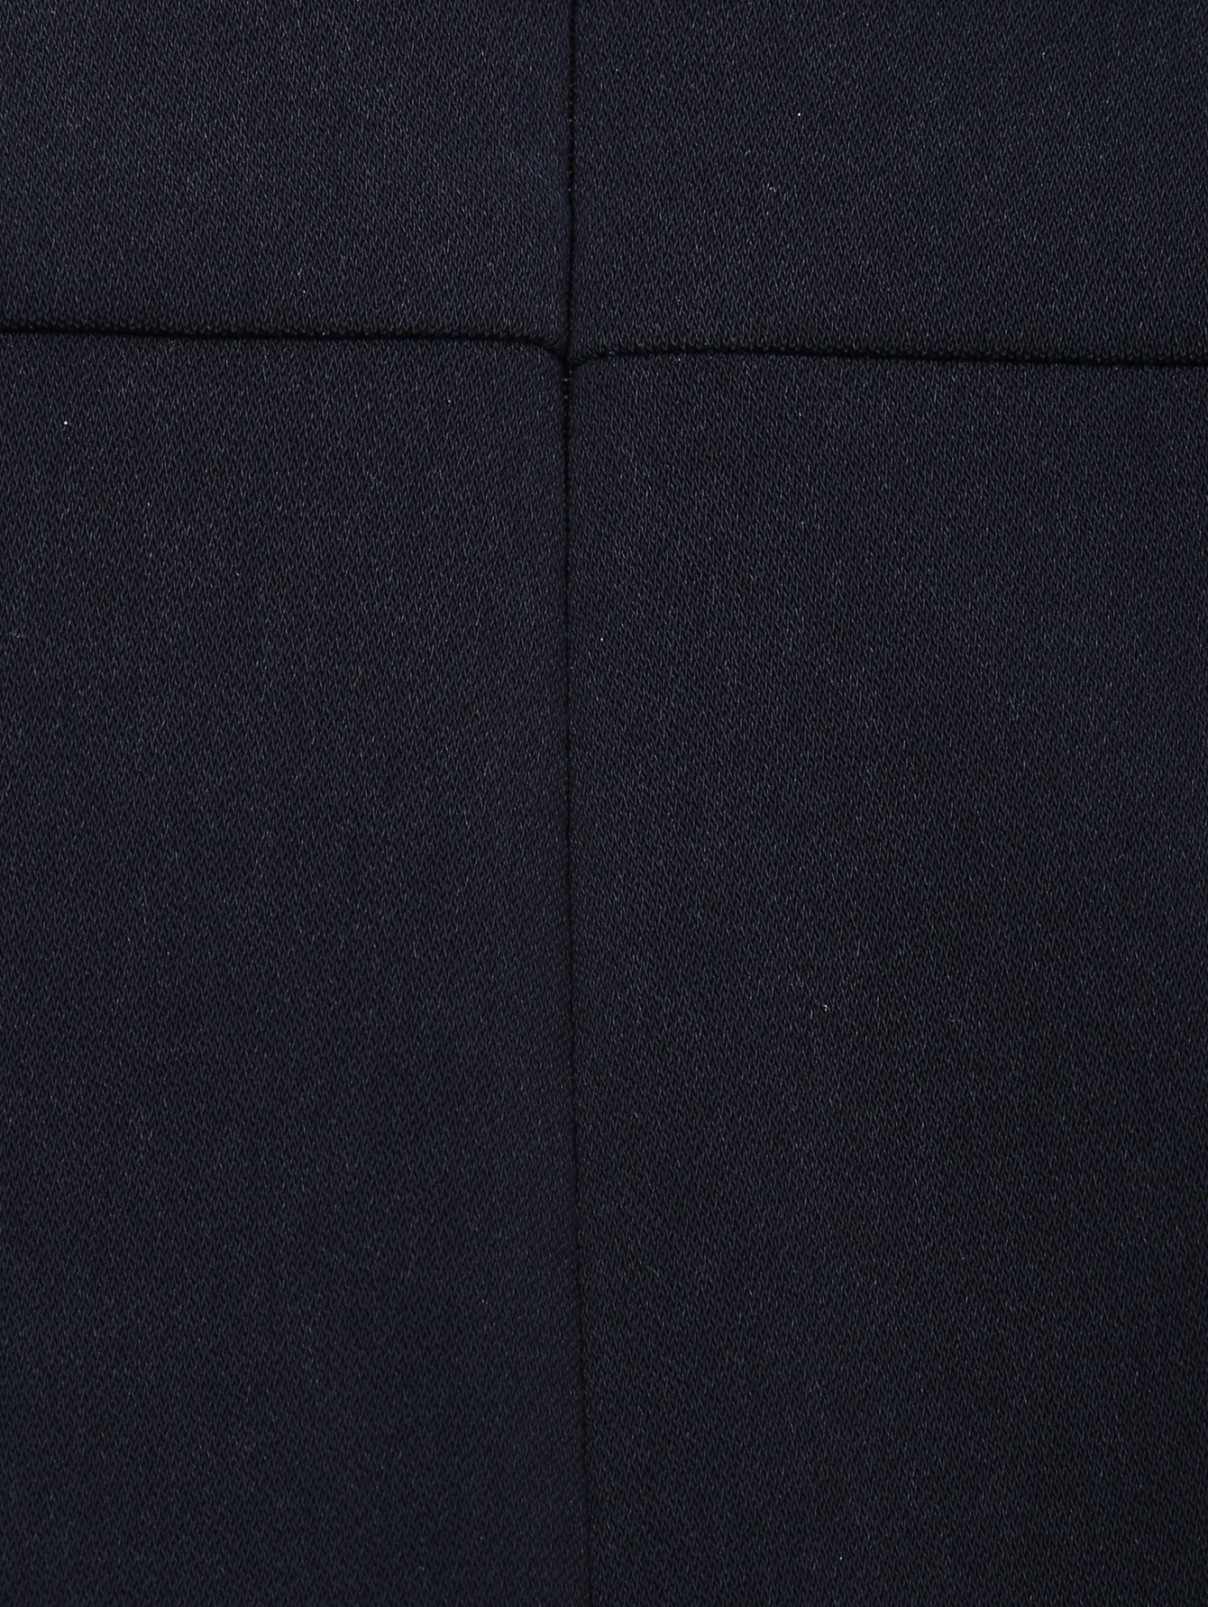 Юбка-миди с разрезом Persona by Marina Rinaldi  –  Деталь1  – Цвет:  Синий